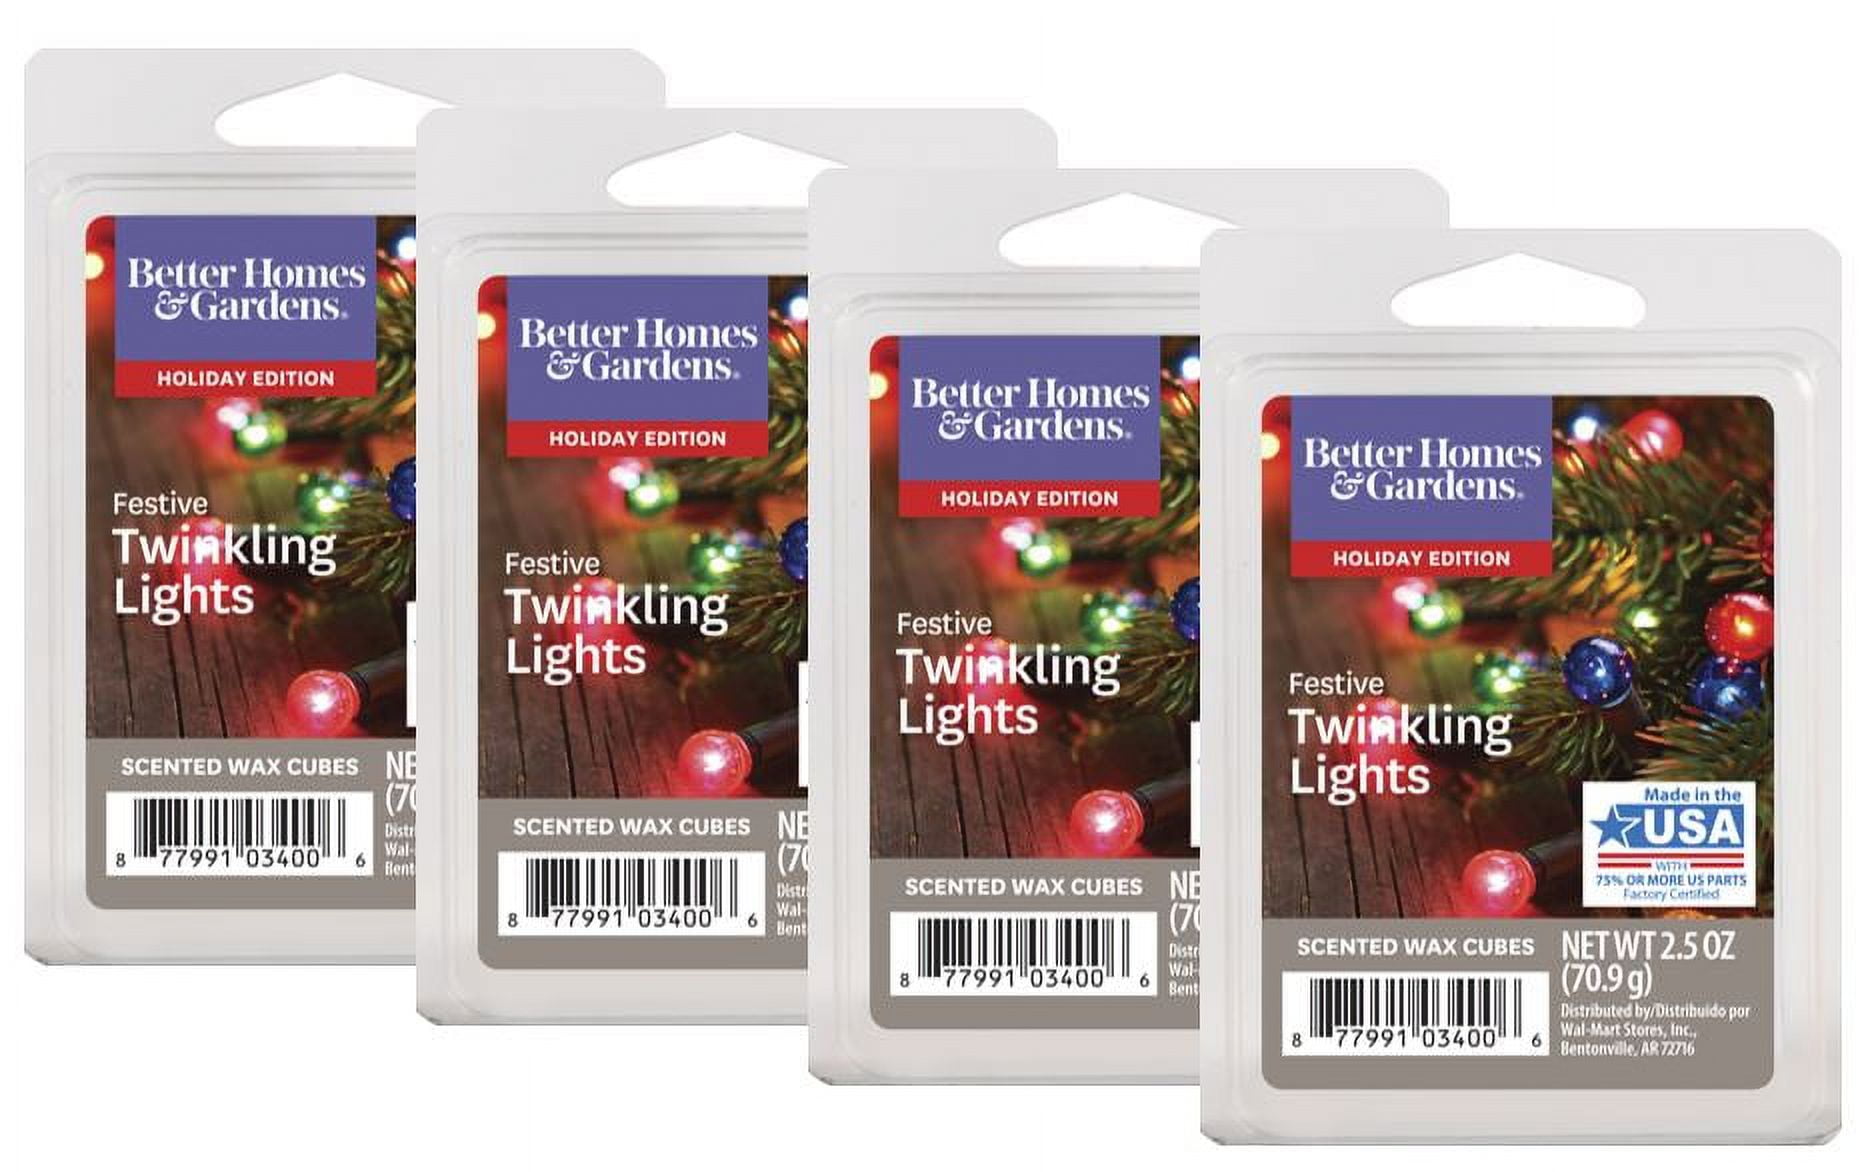 HONEY COMB TEA LIGHT WAX WARMER – 375 Wax Melts, LLC